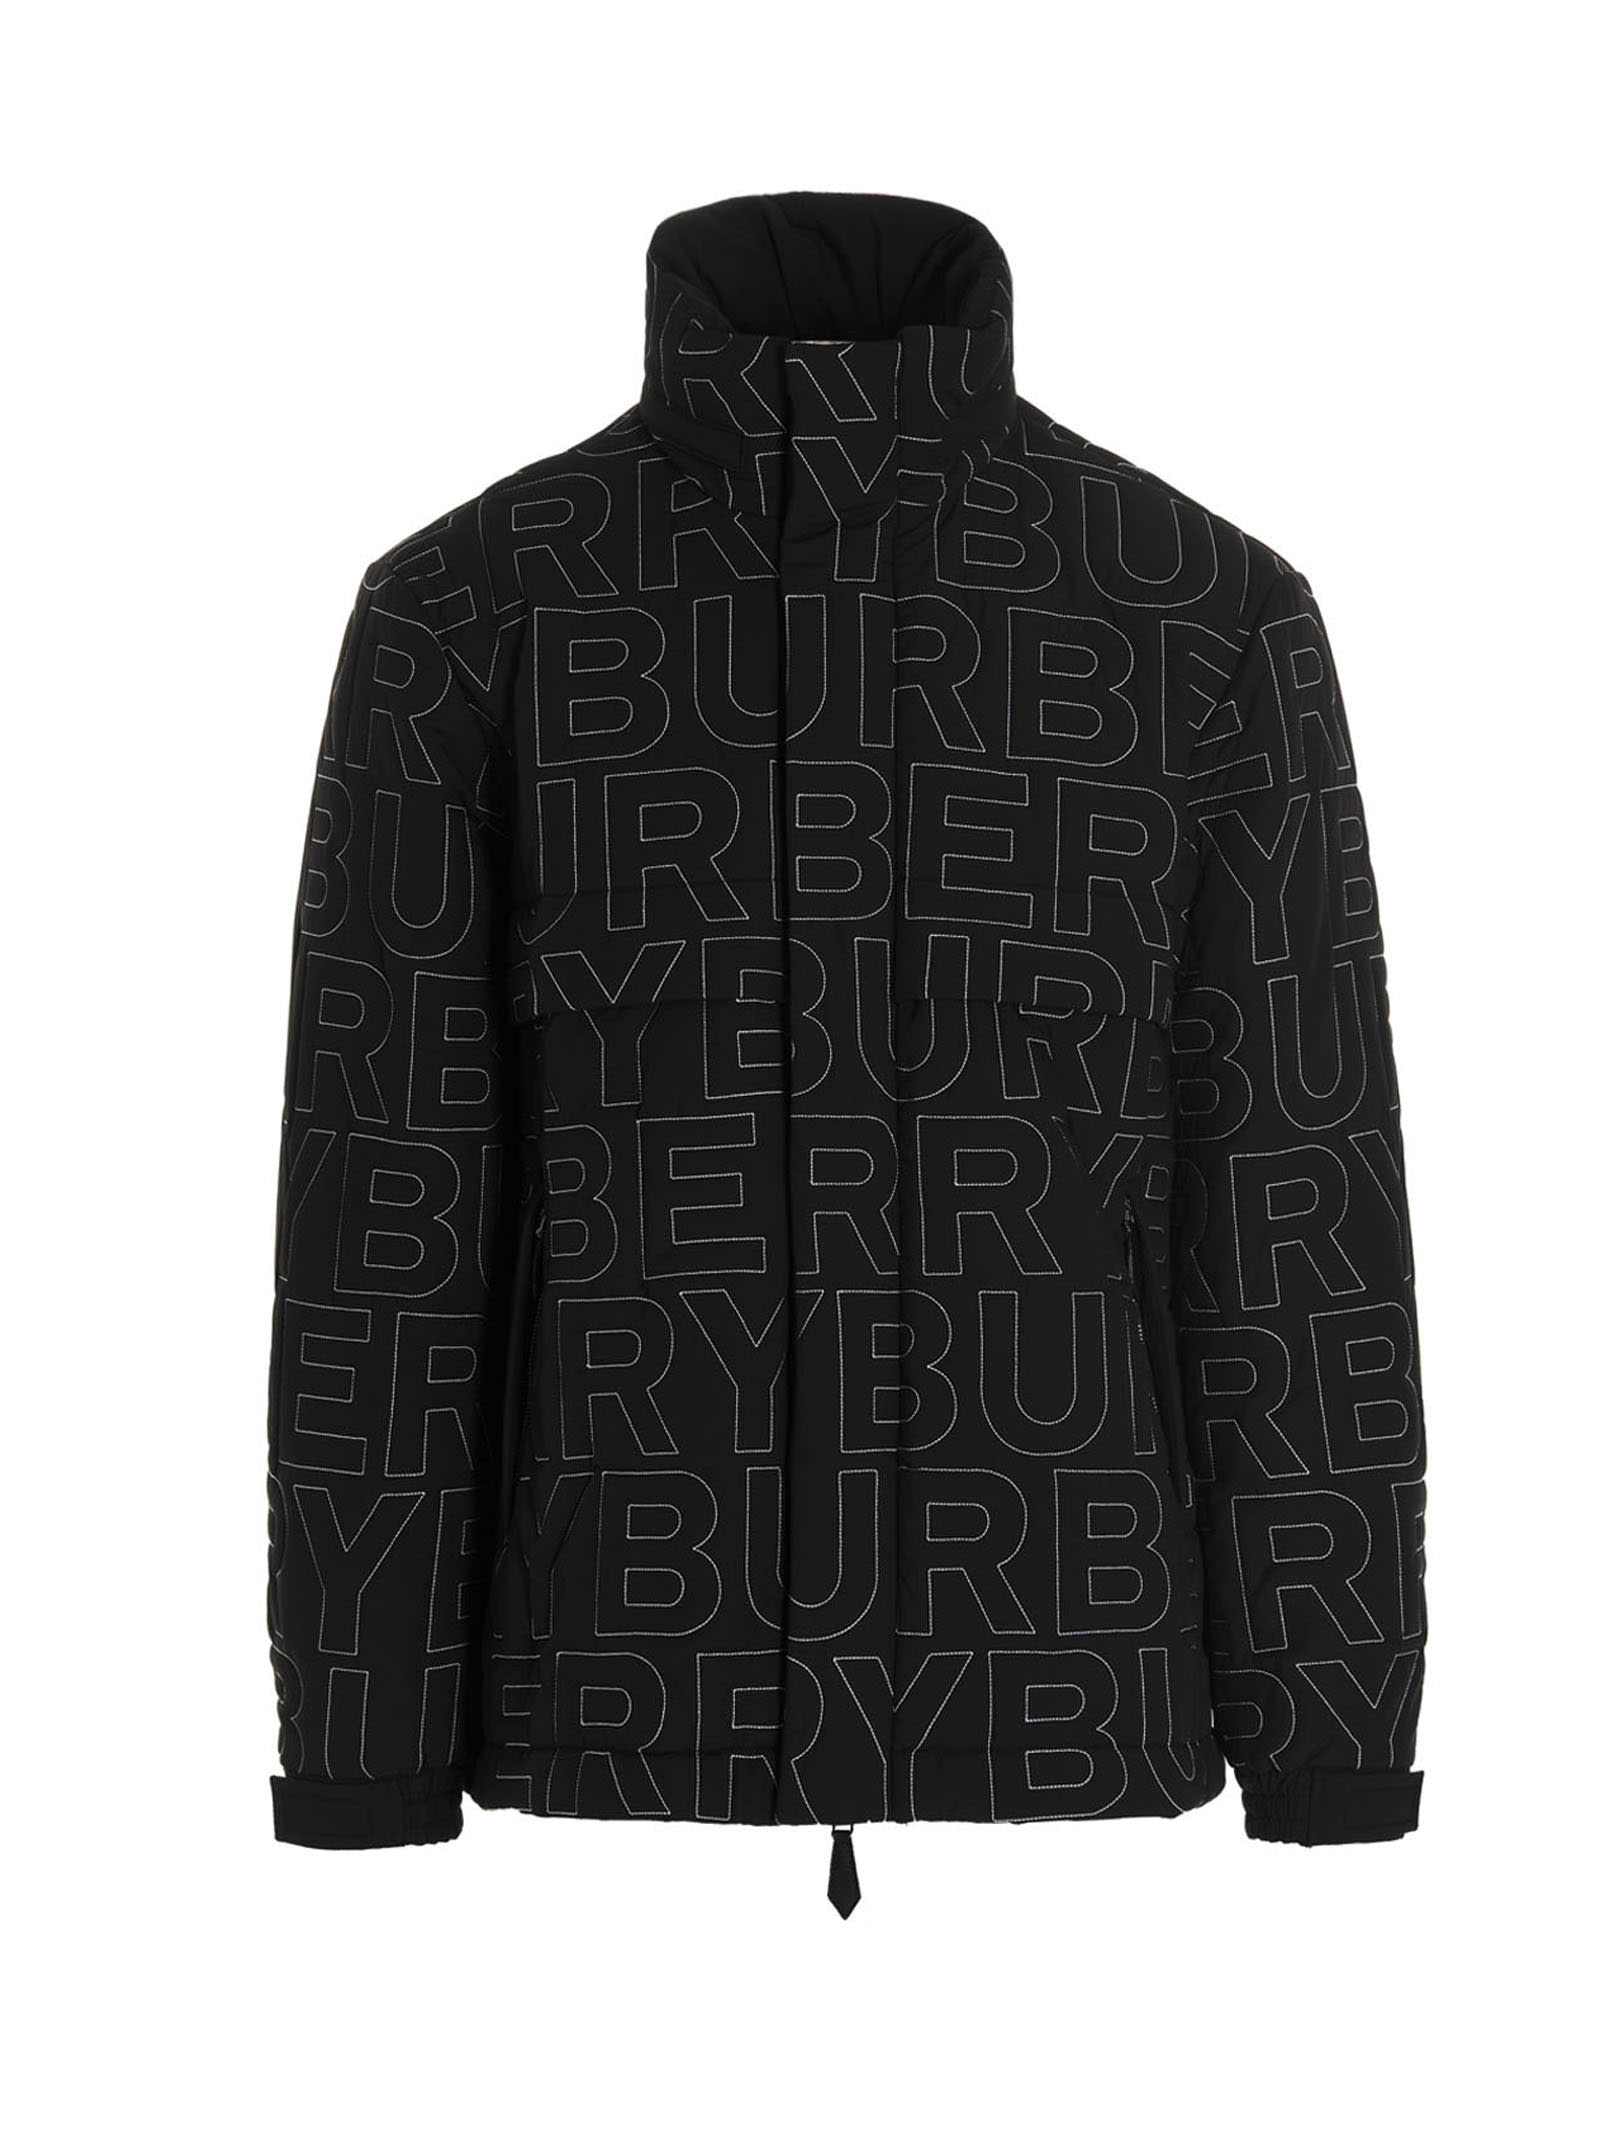 Burberry daiton Jacket